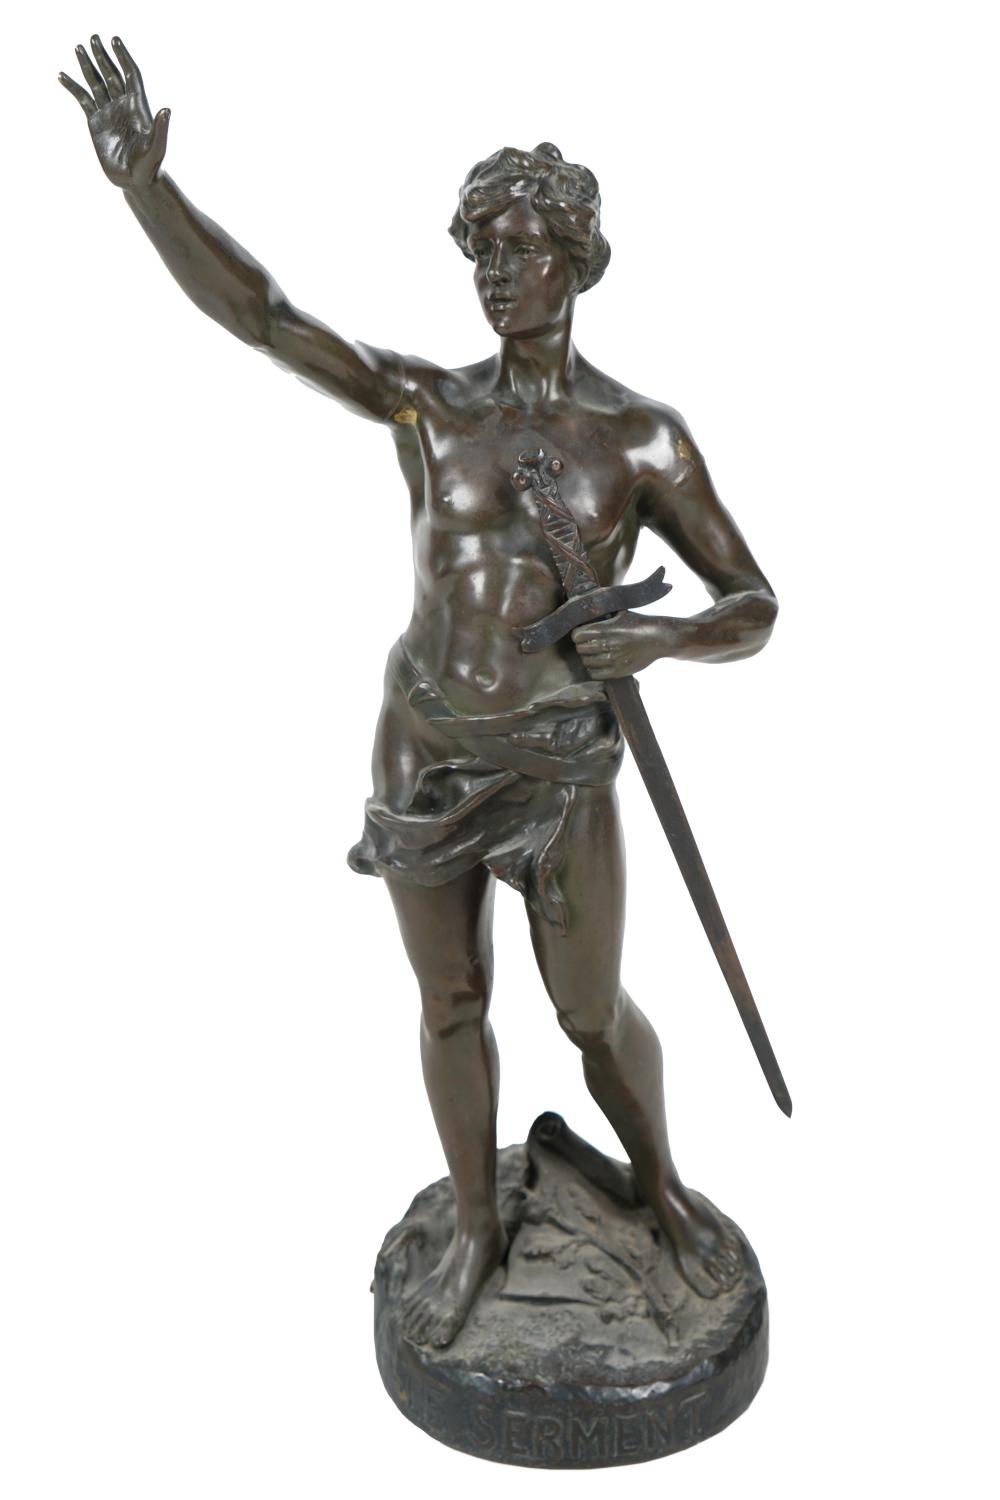 RUFFONY (20TH CENTURY): "LE SERMENT"bronze